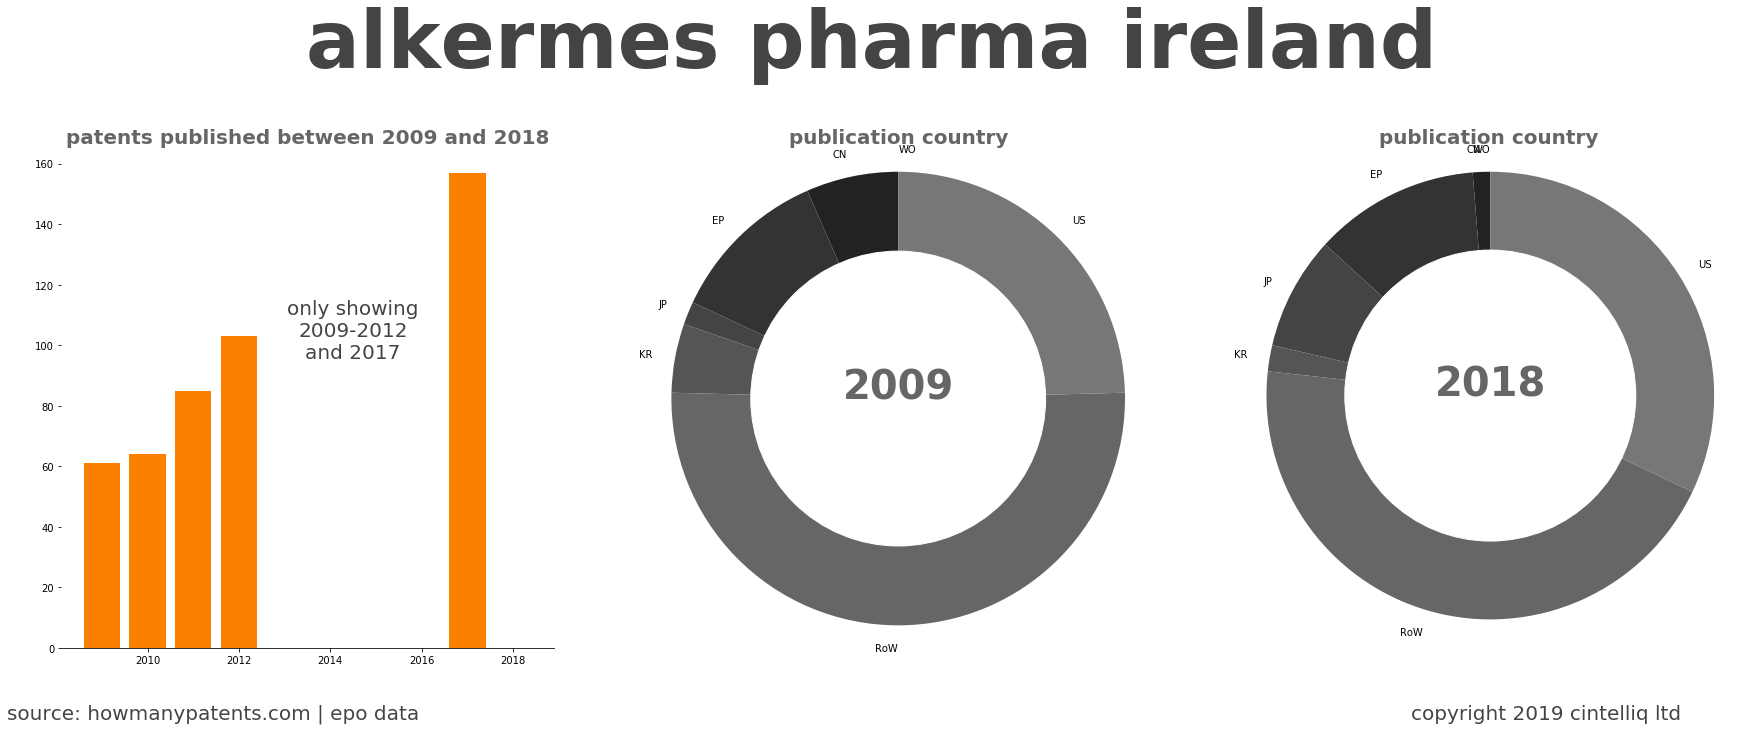 summary of patents for Alkermes Pharma Ireland